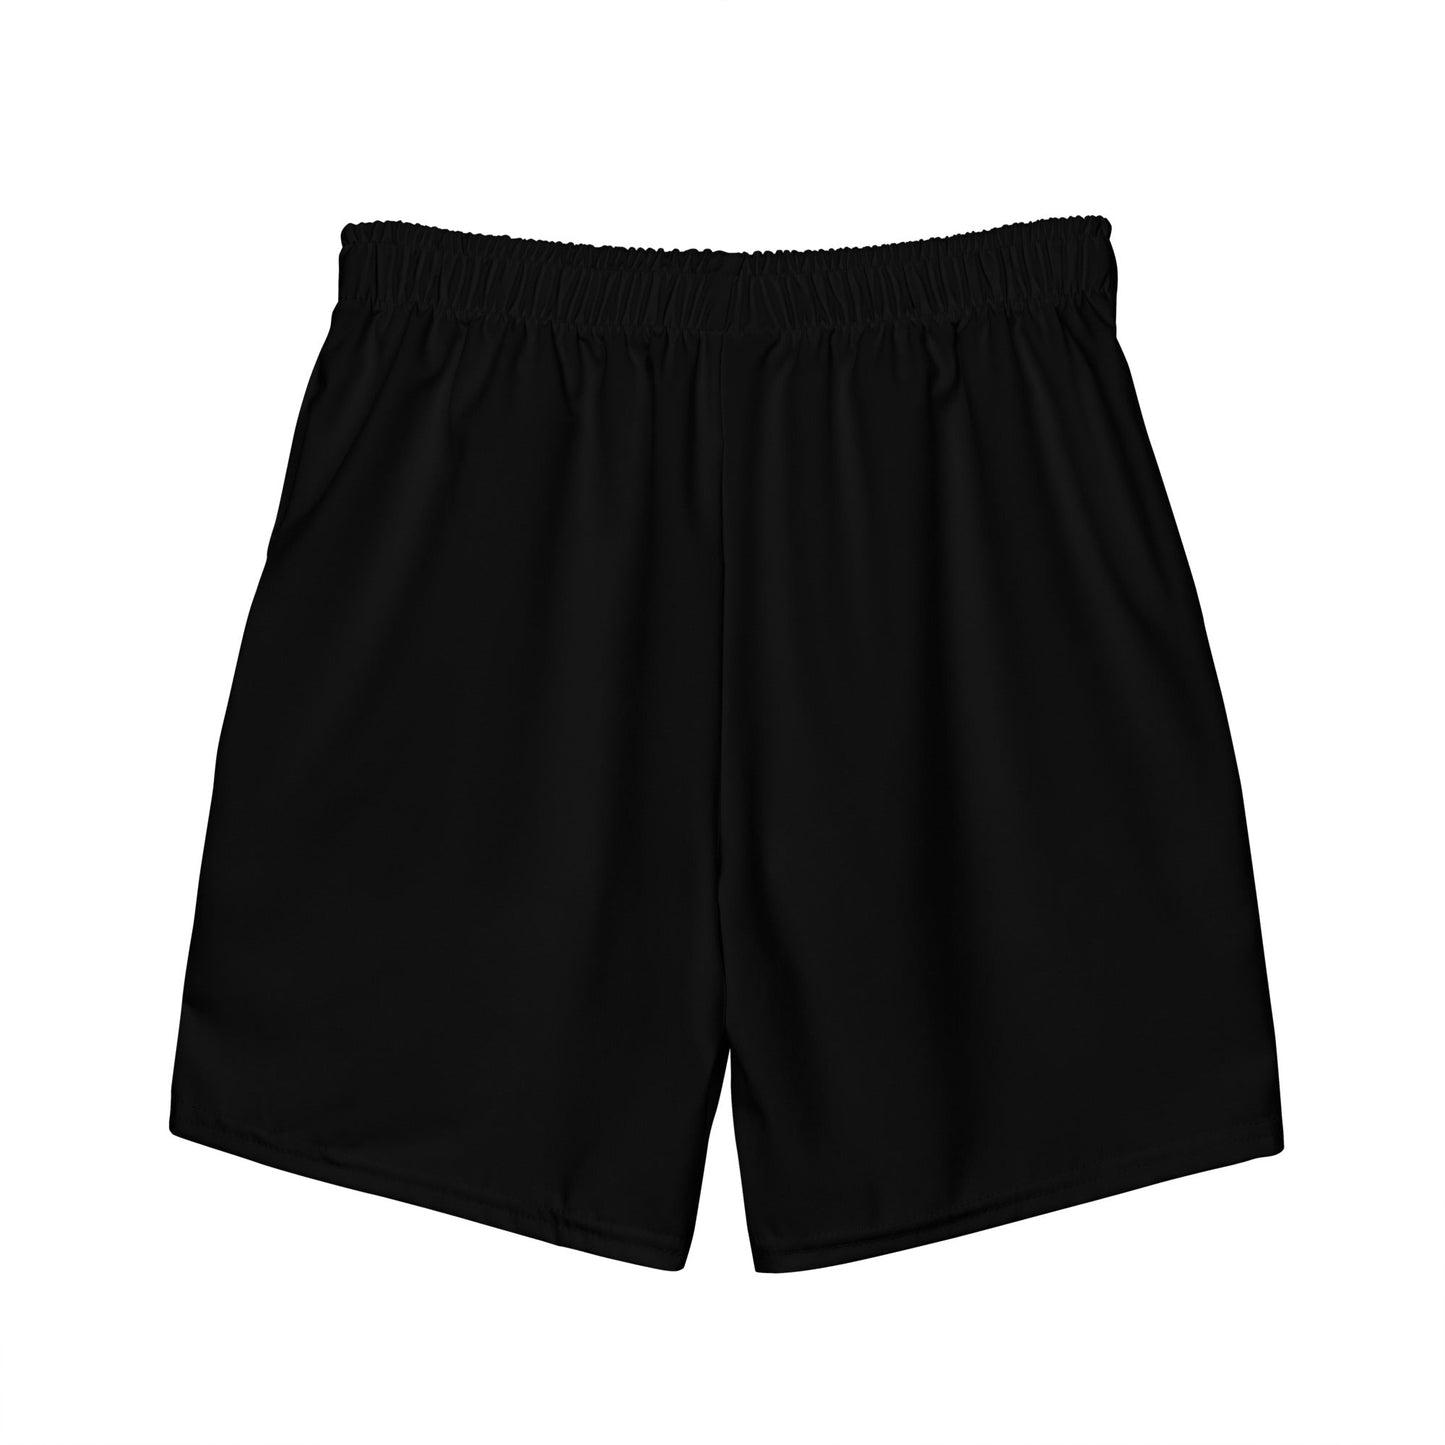 Men's Black Eco Board Shorts - Tropical Seas Clothing 